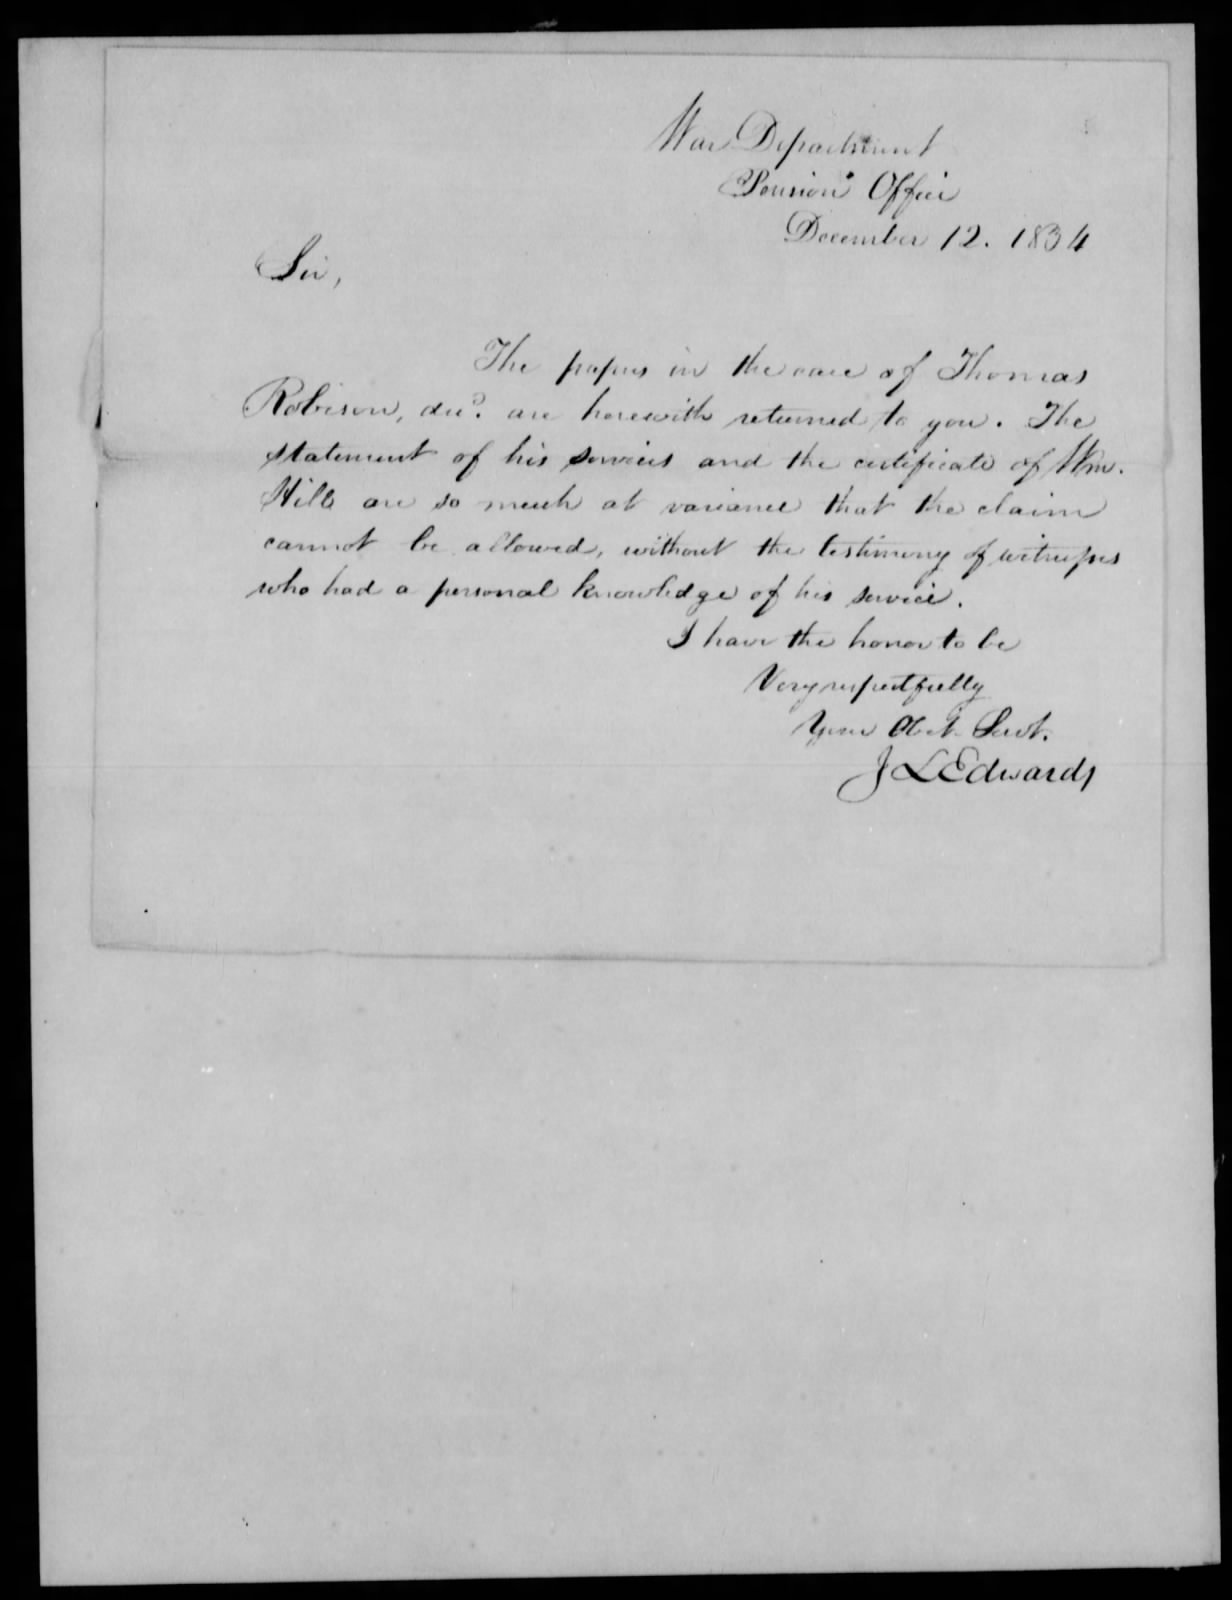 Letter from James L. Edwards to John Blair, 12 December 1834